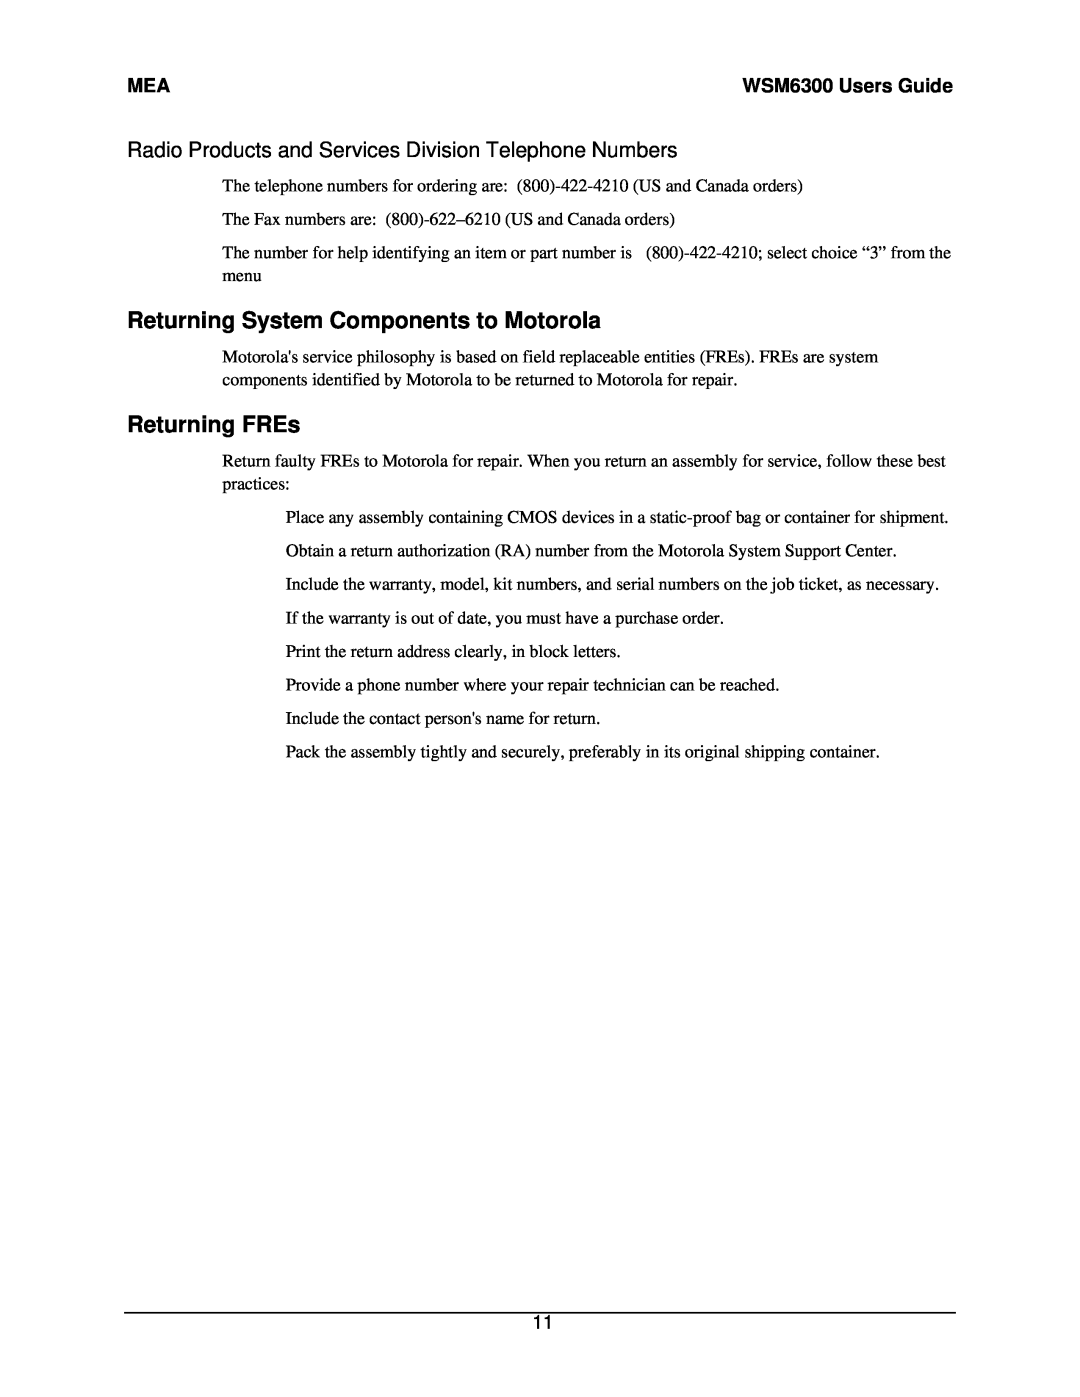 Motorola manual Returning System Components to Motorola, Returning FREs, WSM6300 Users Guide 